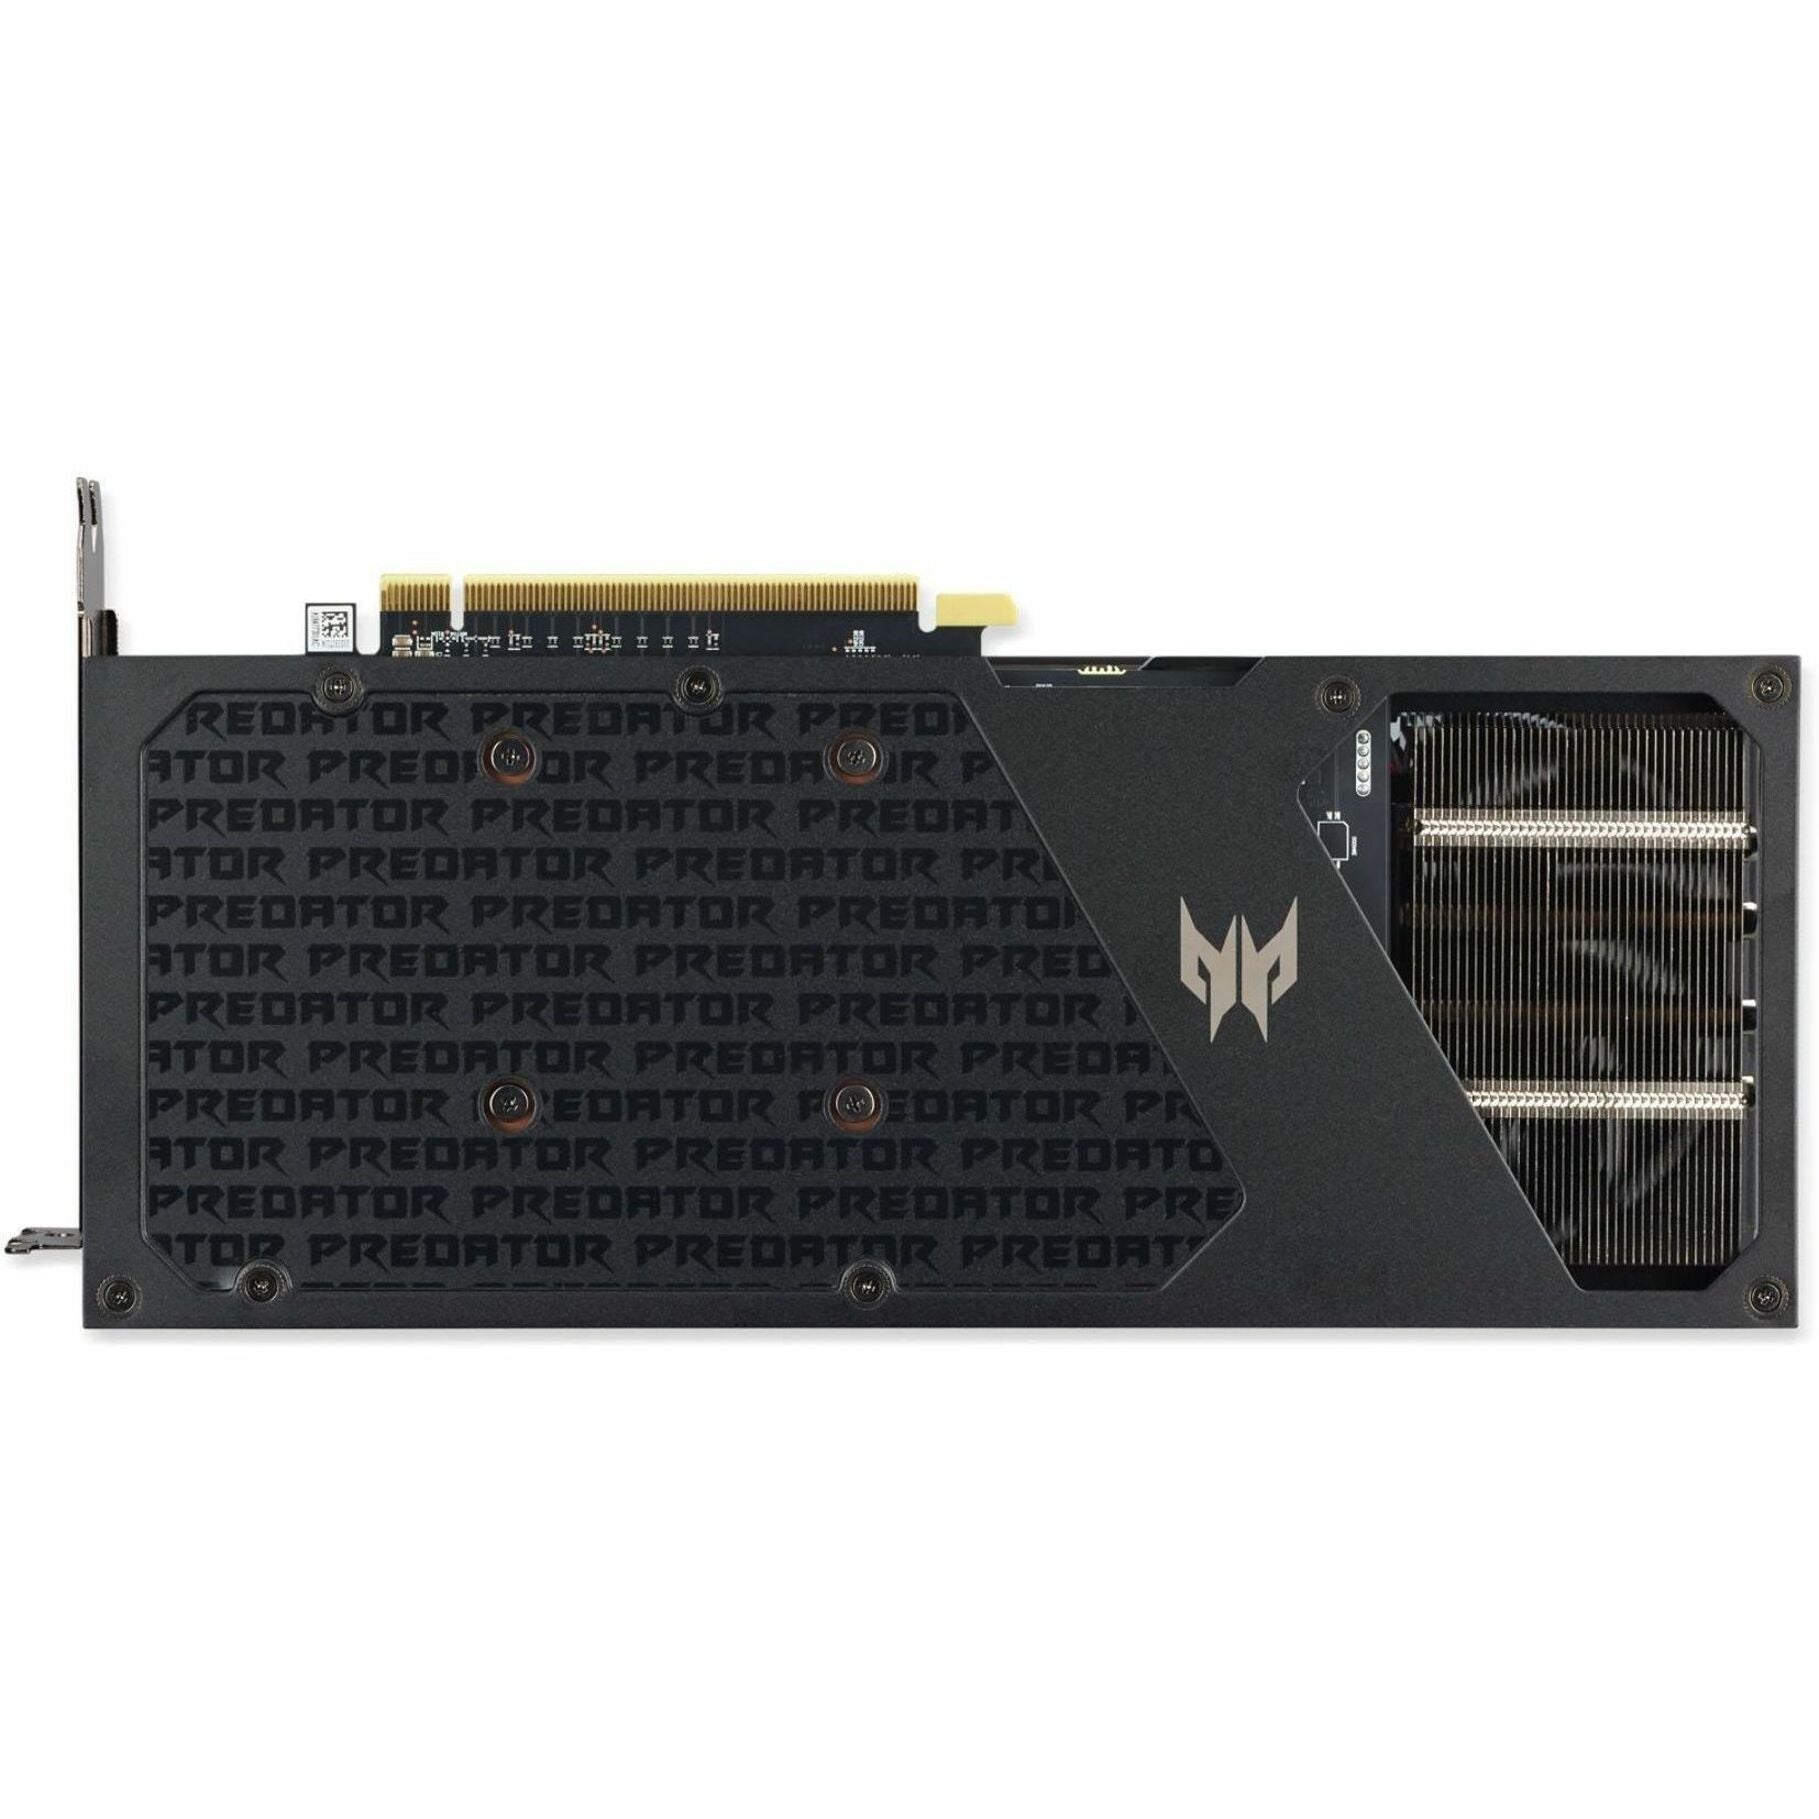 Acer DP.Z36WW.P02 Predator BiFrost AMD Radeon RX 7600 8G OC Graphic Card, 8GB GDDR6, PCIe 4.0, 4K Resolution Support